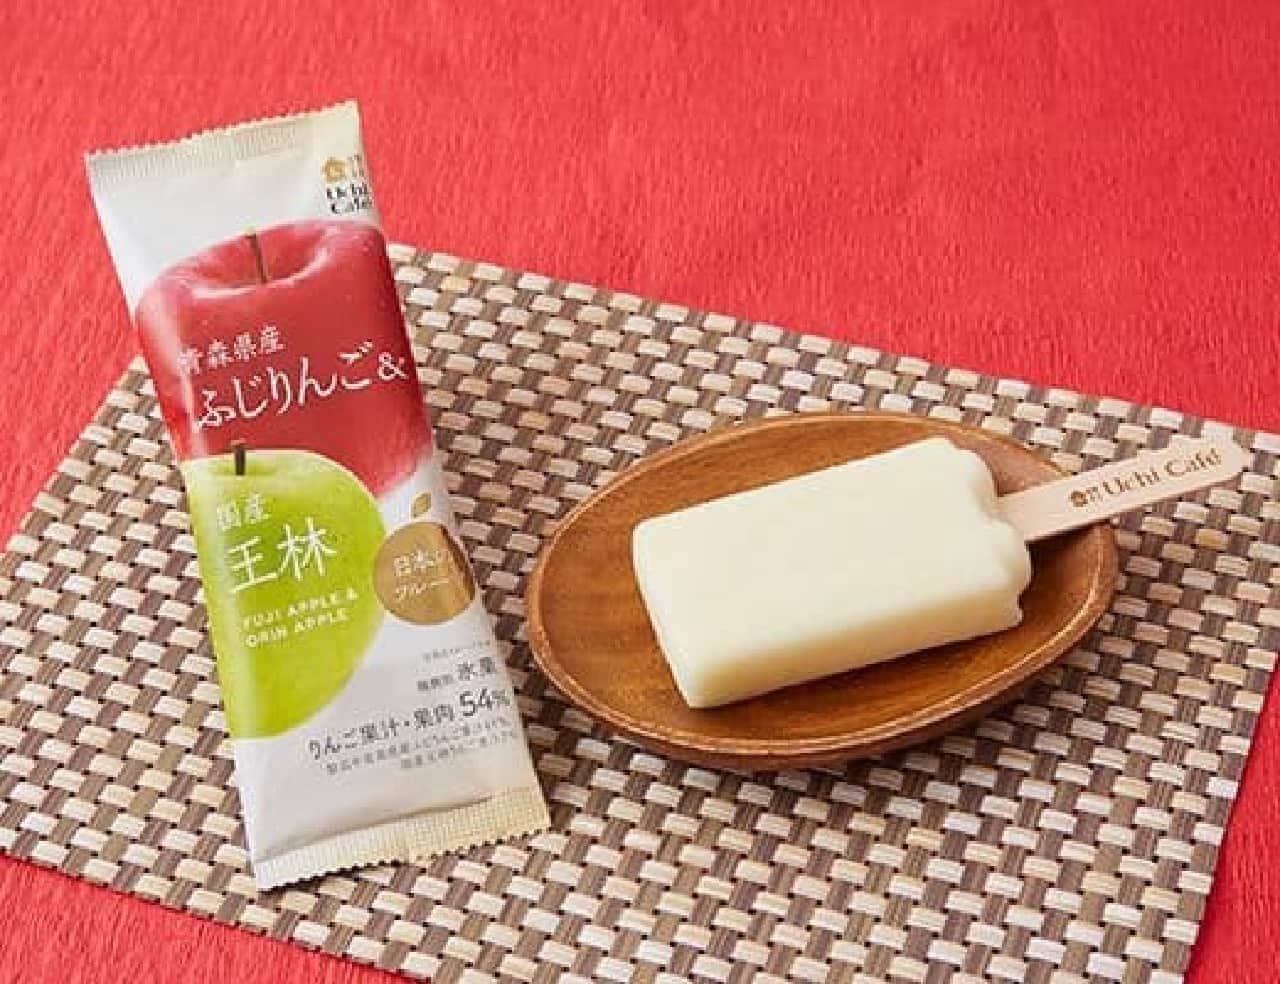 UCHI-CAFE Japanese Fruits: Aomori Fuji Apples & Domestic O-Rin 75ml